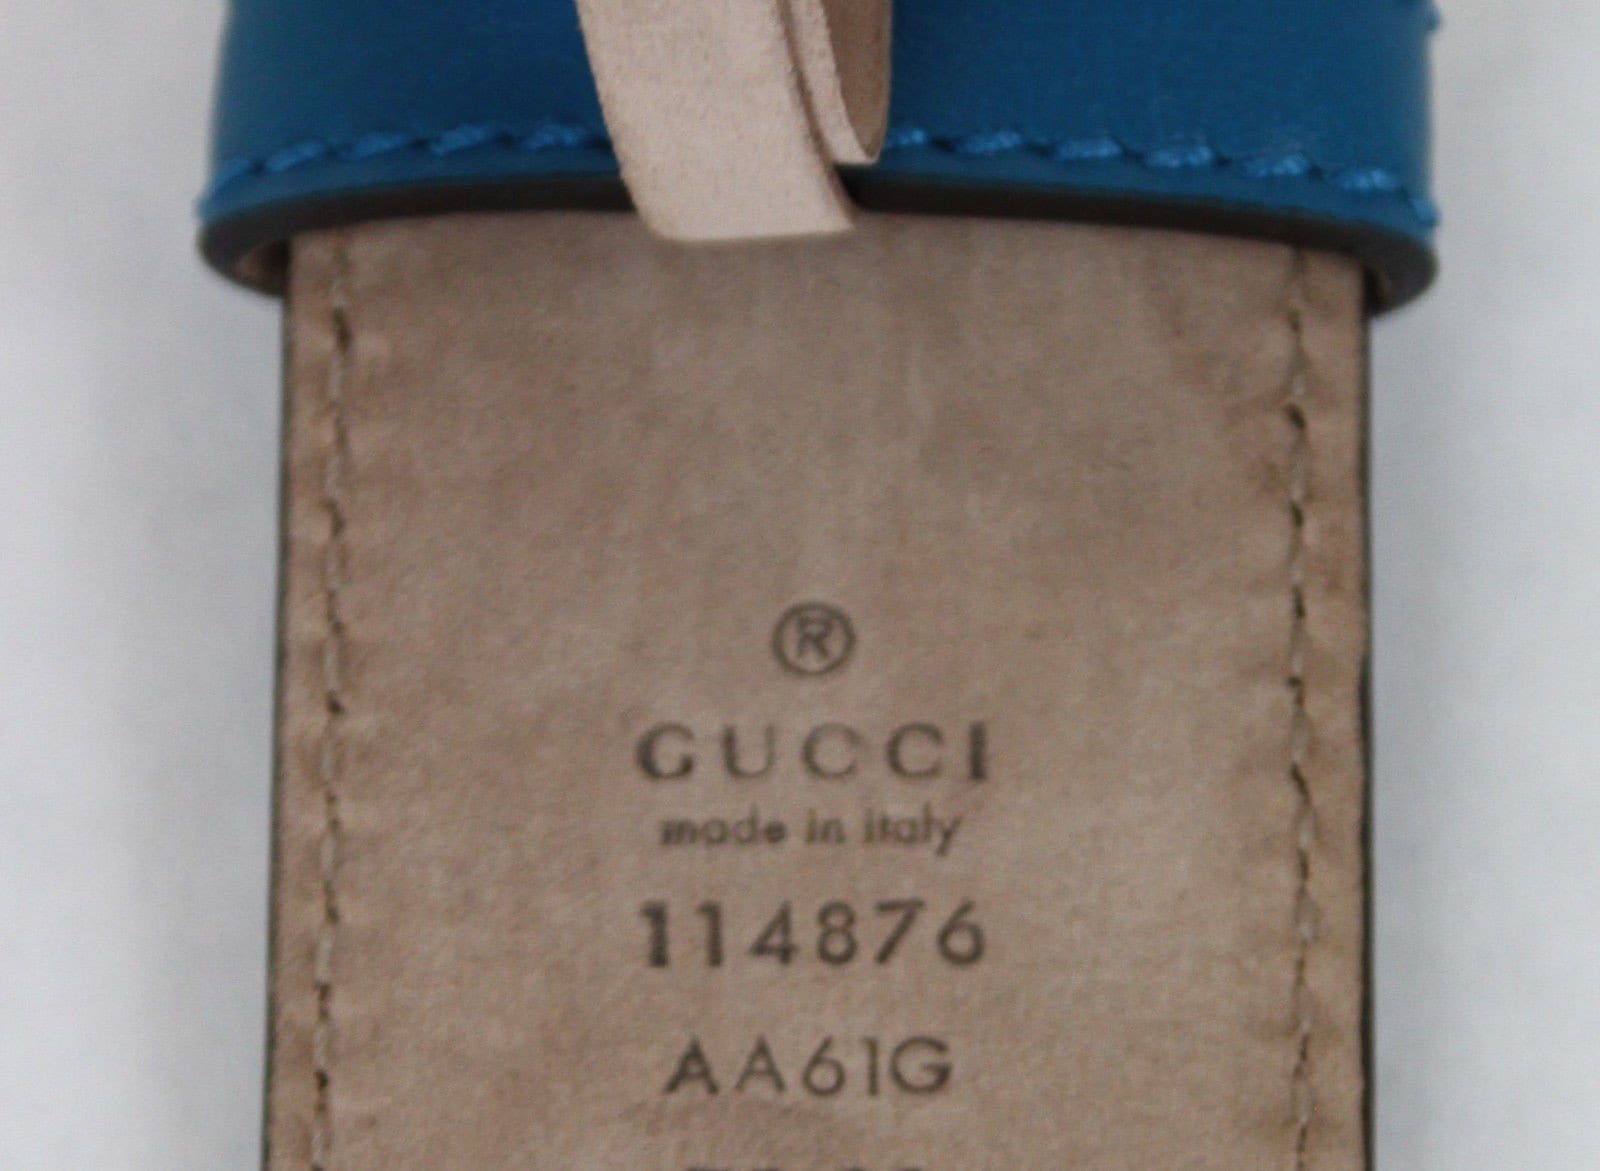 Gucci Teal Guccissima Leather Interlocking G Buckle Belt 114876 4618 (